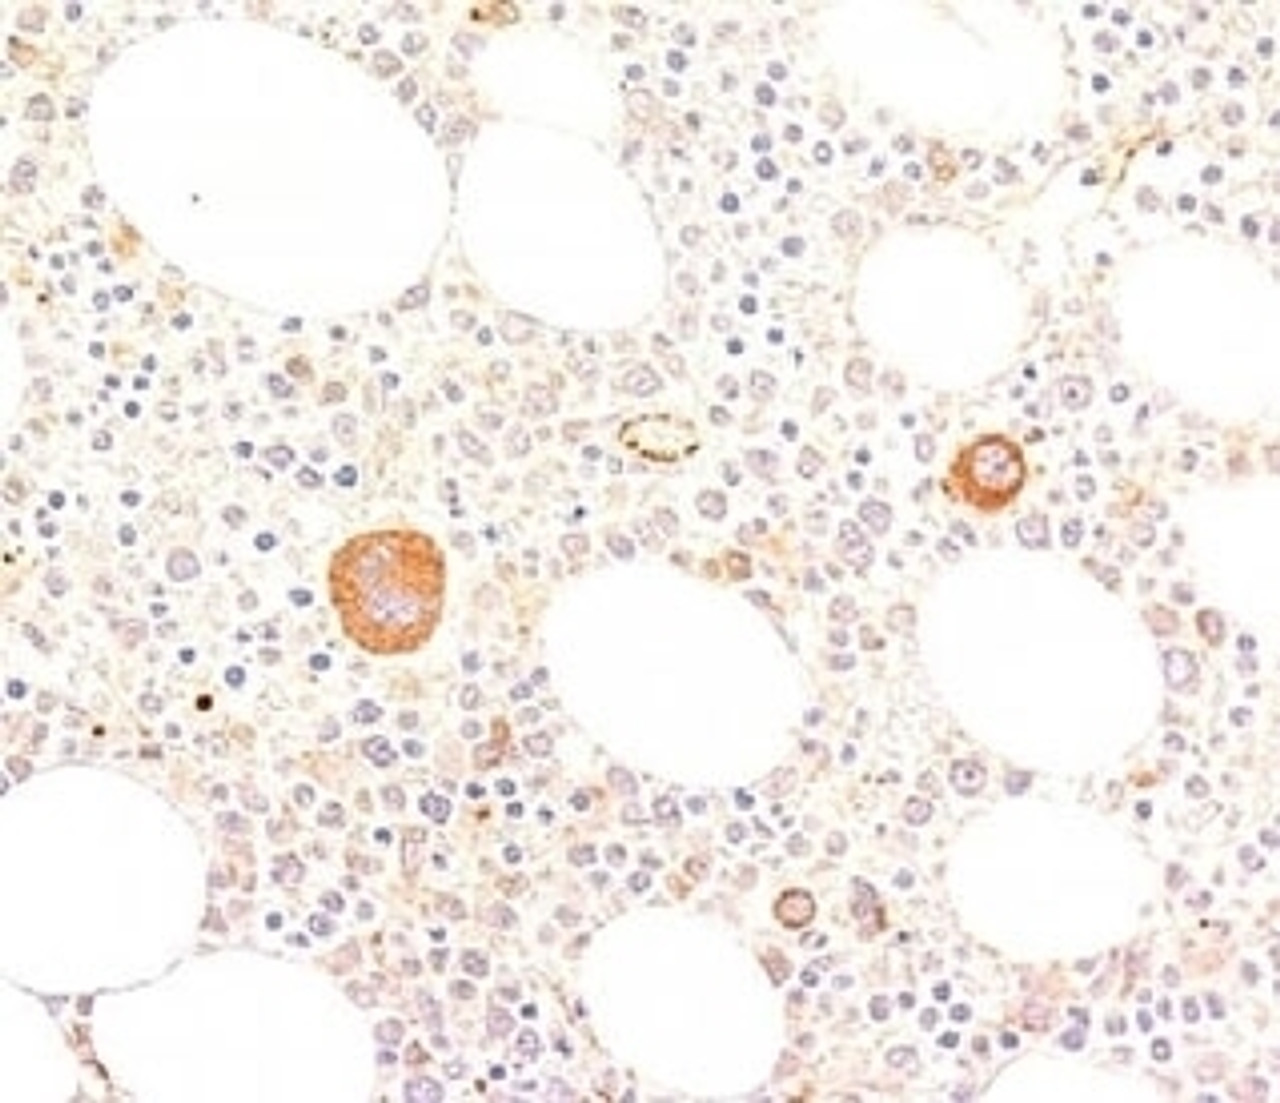 IHC staining of human bone marrow with von Willebrand Factor antibody (VWF635) .